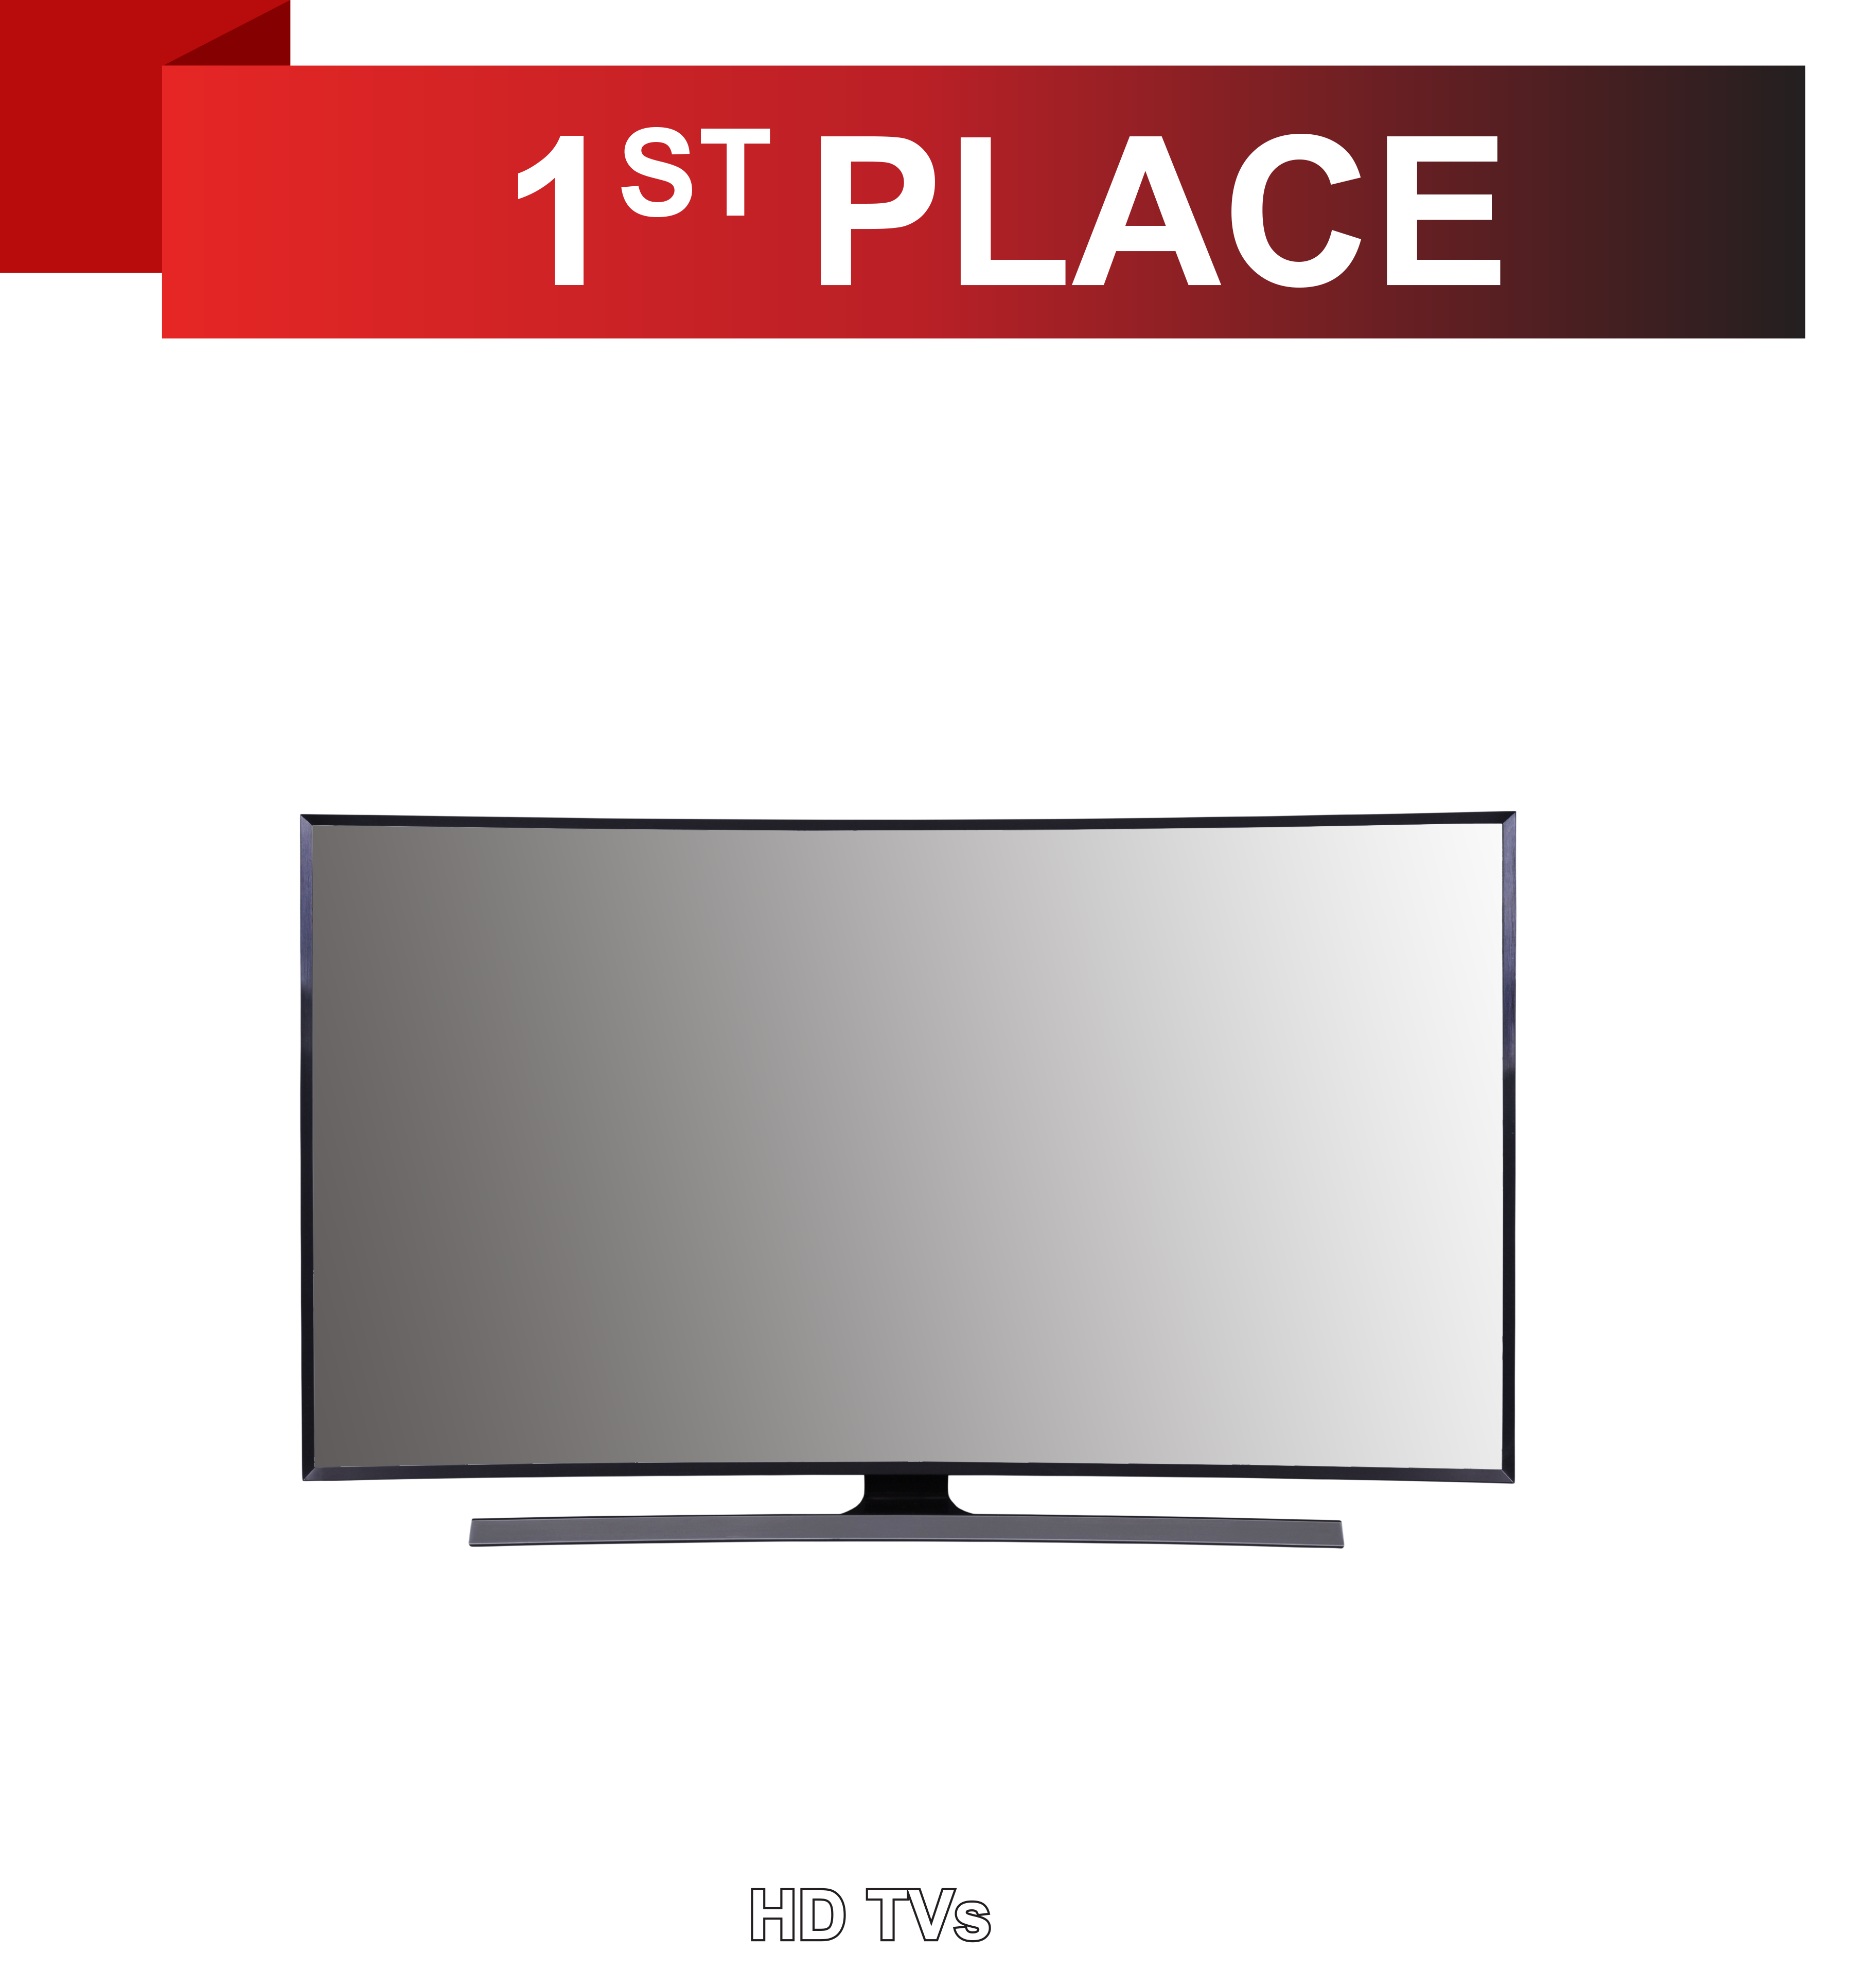 1st Place HD TVs